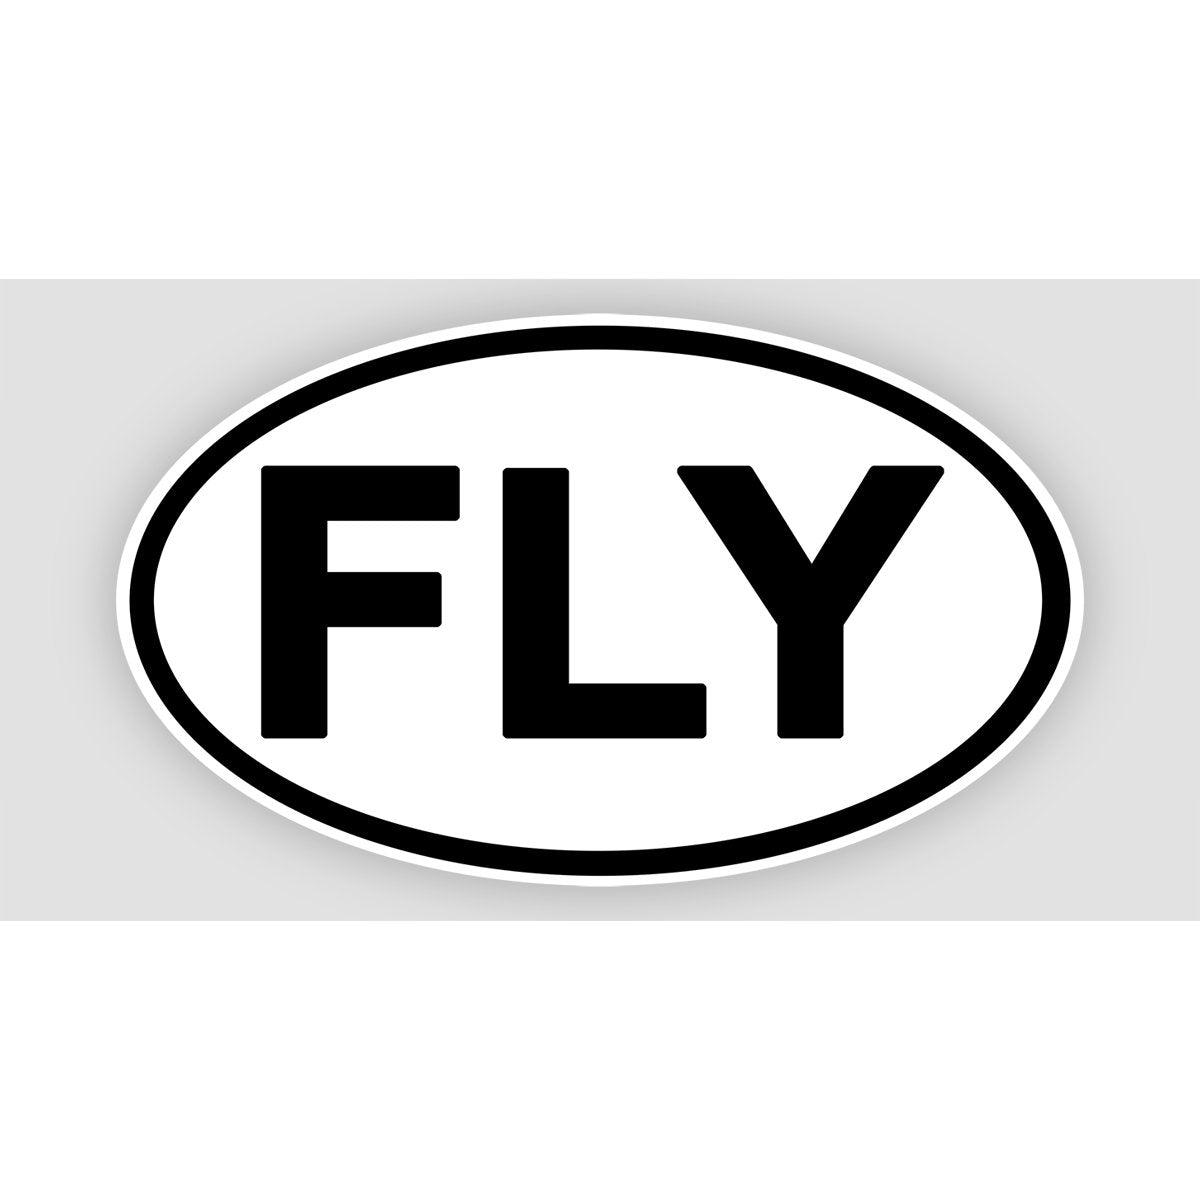 FLY Sticker